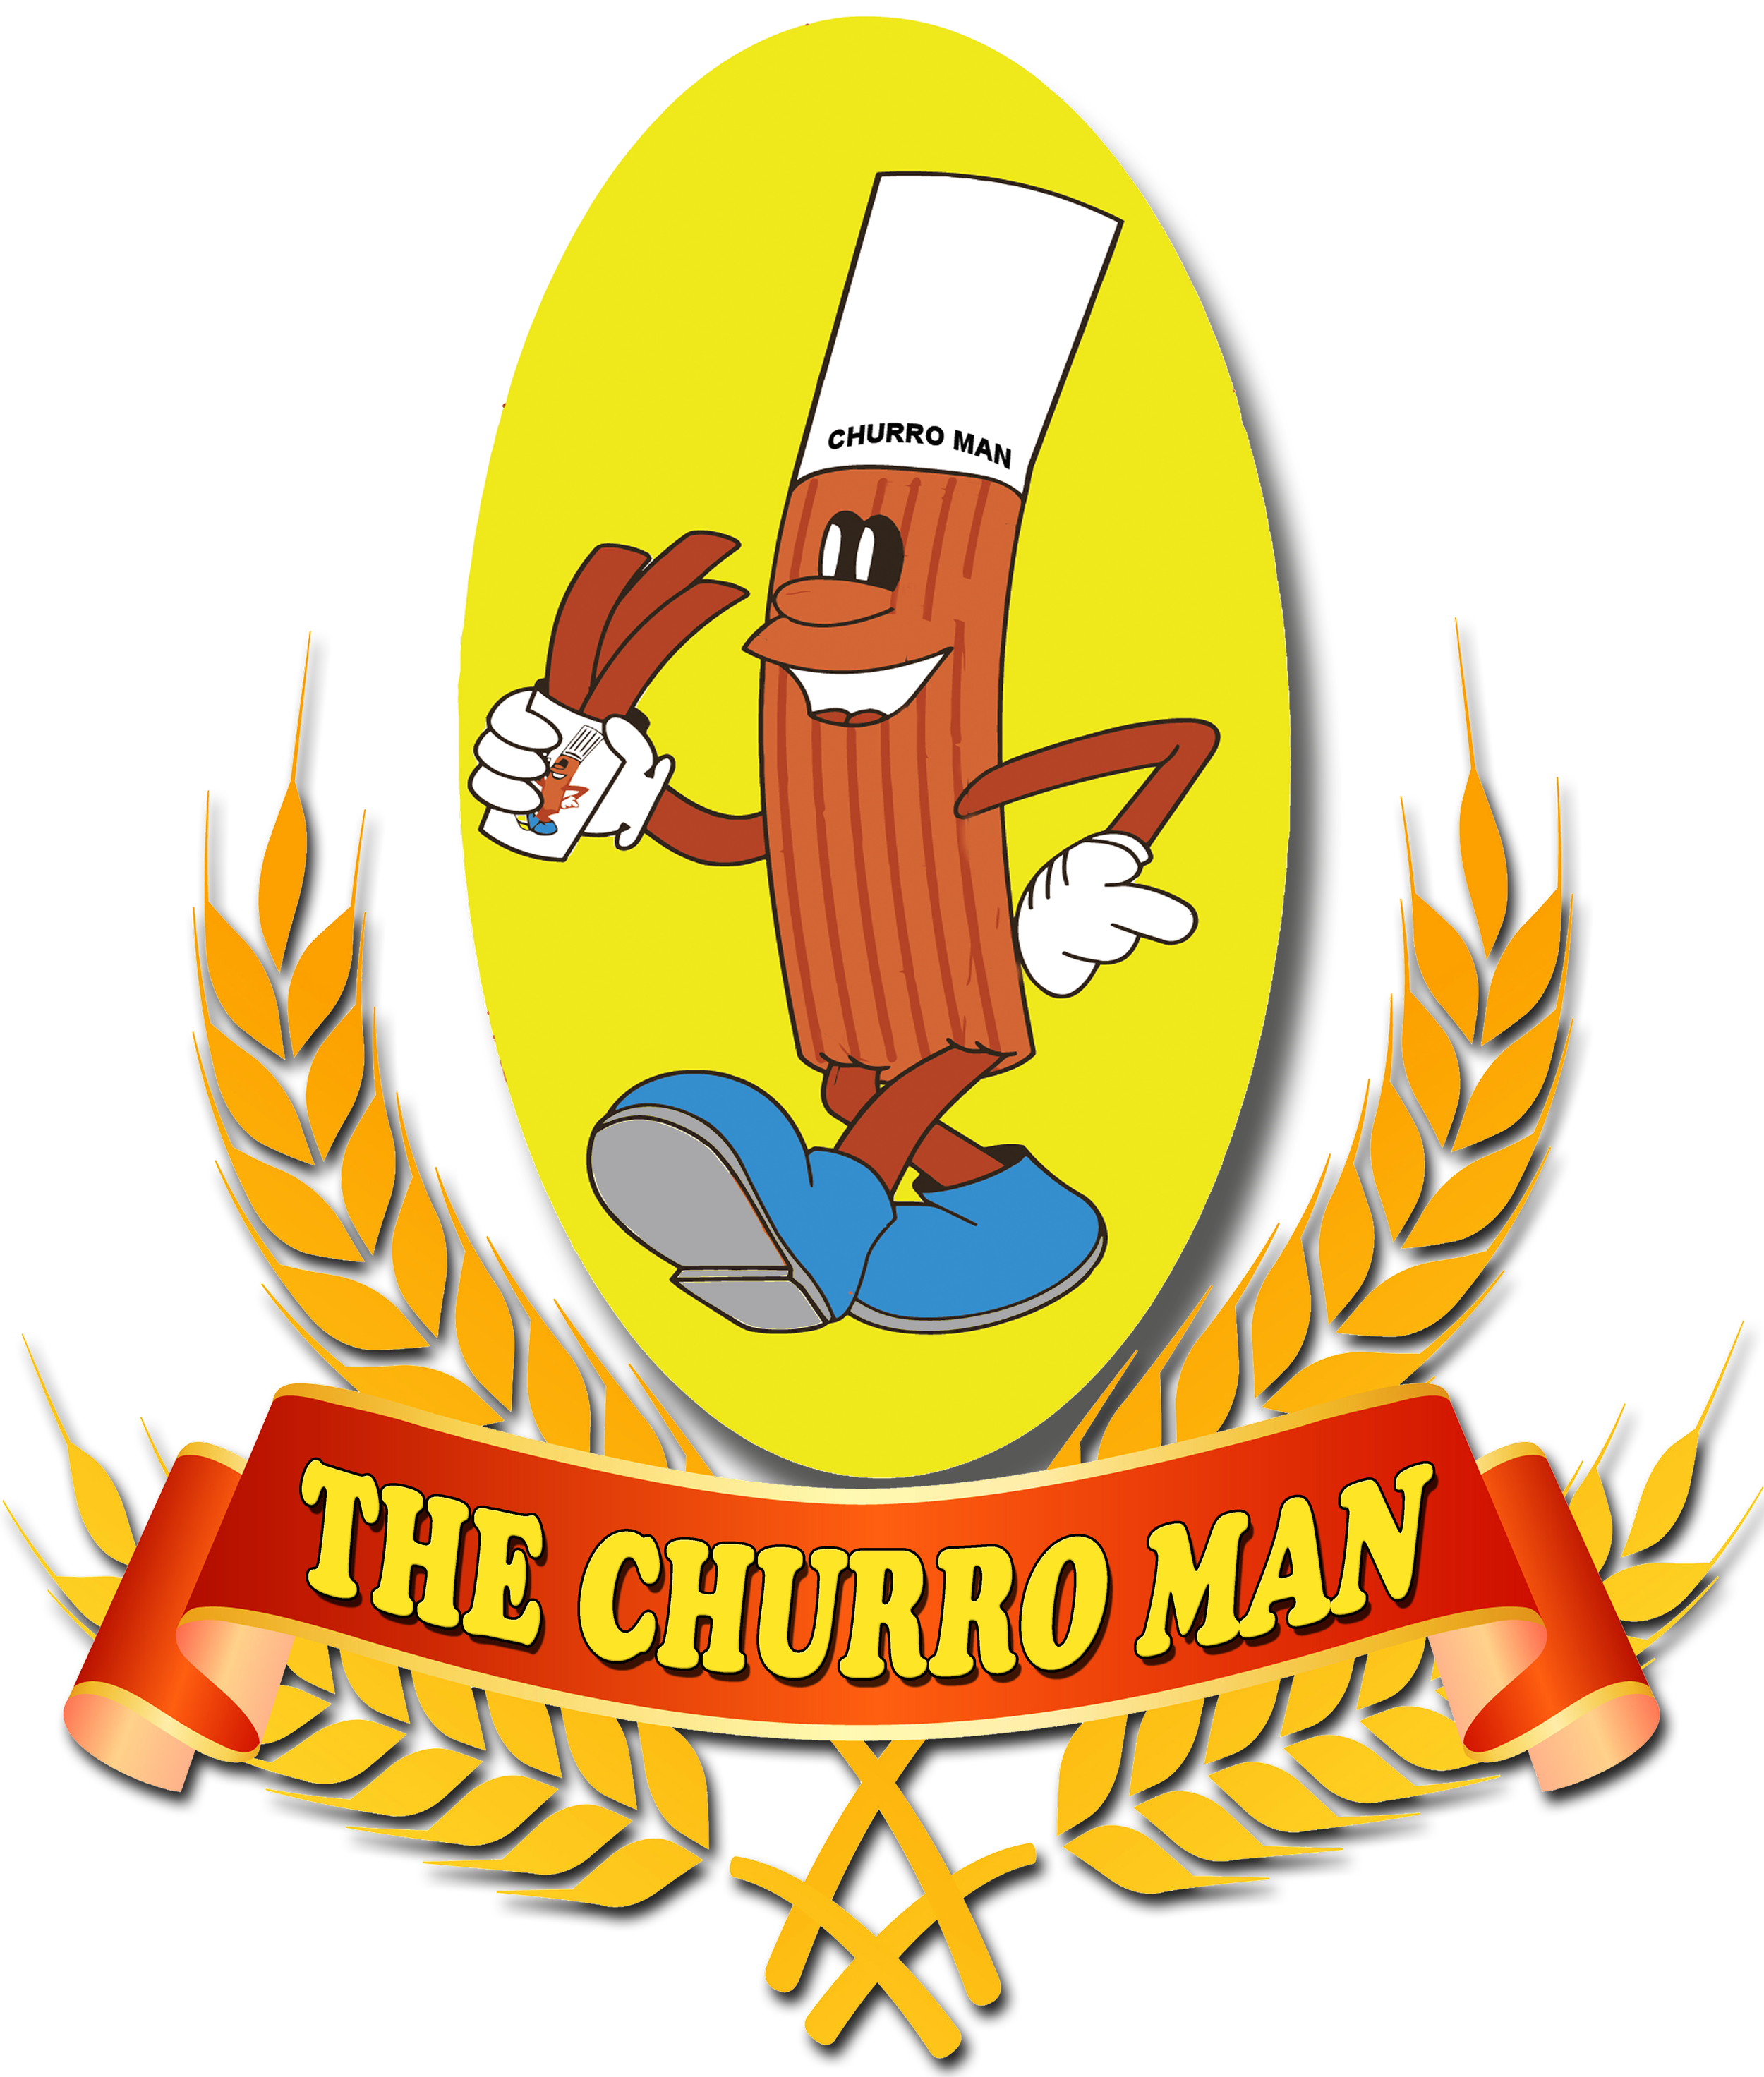 Churro Man